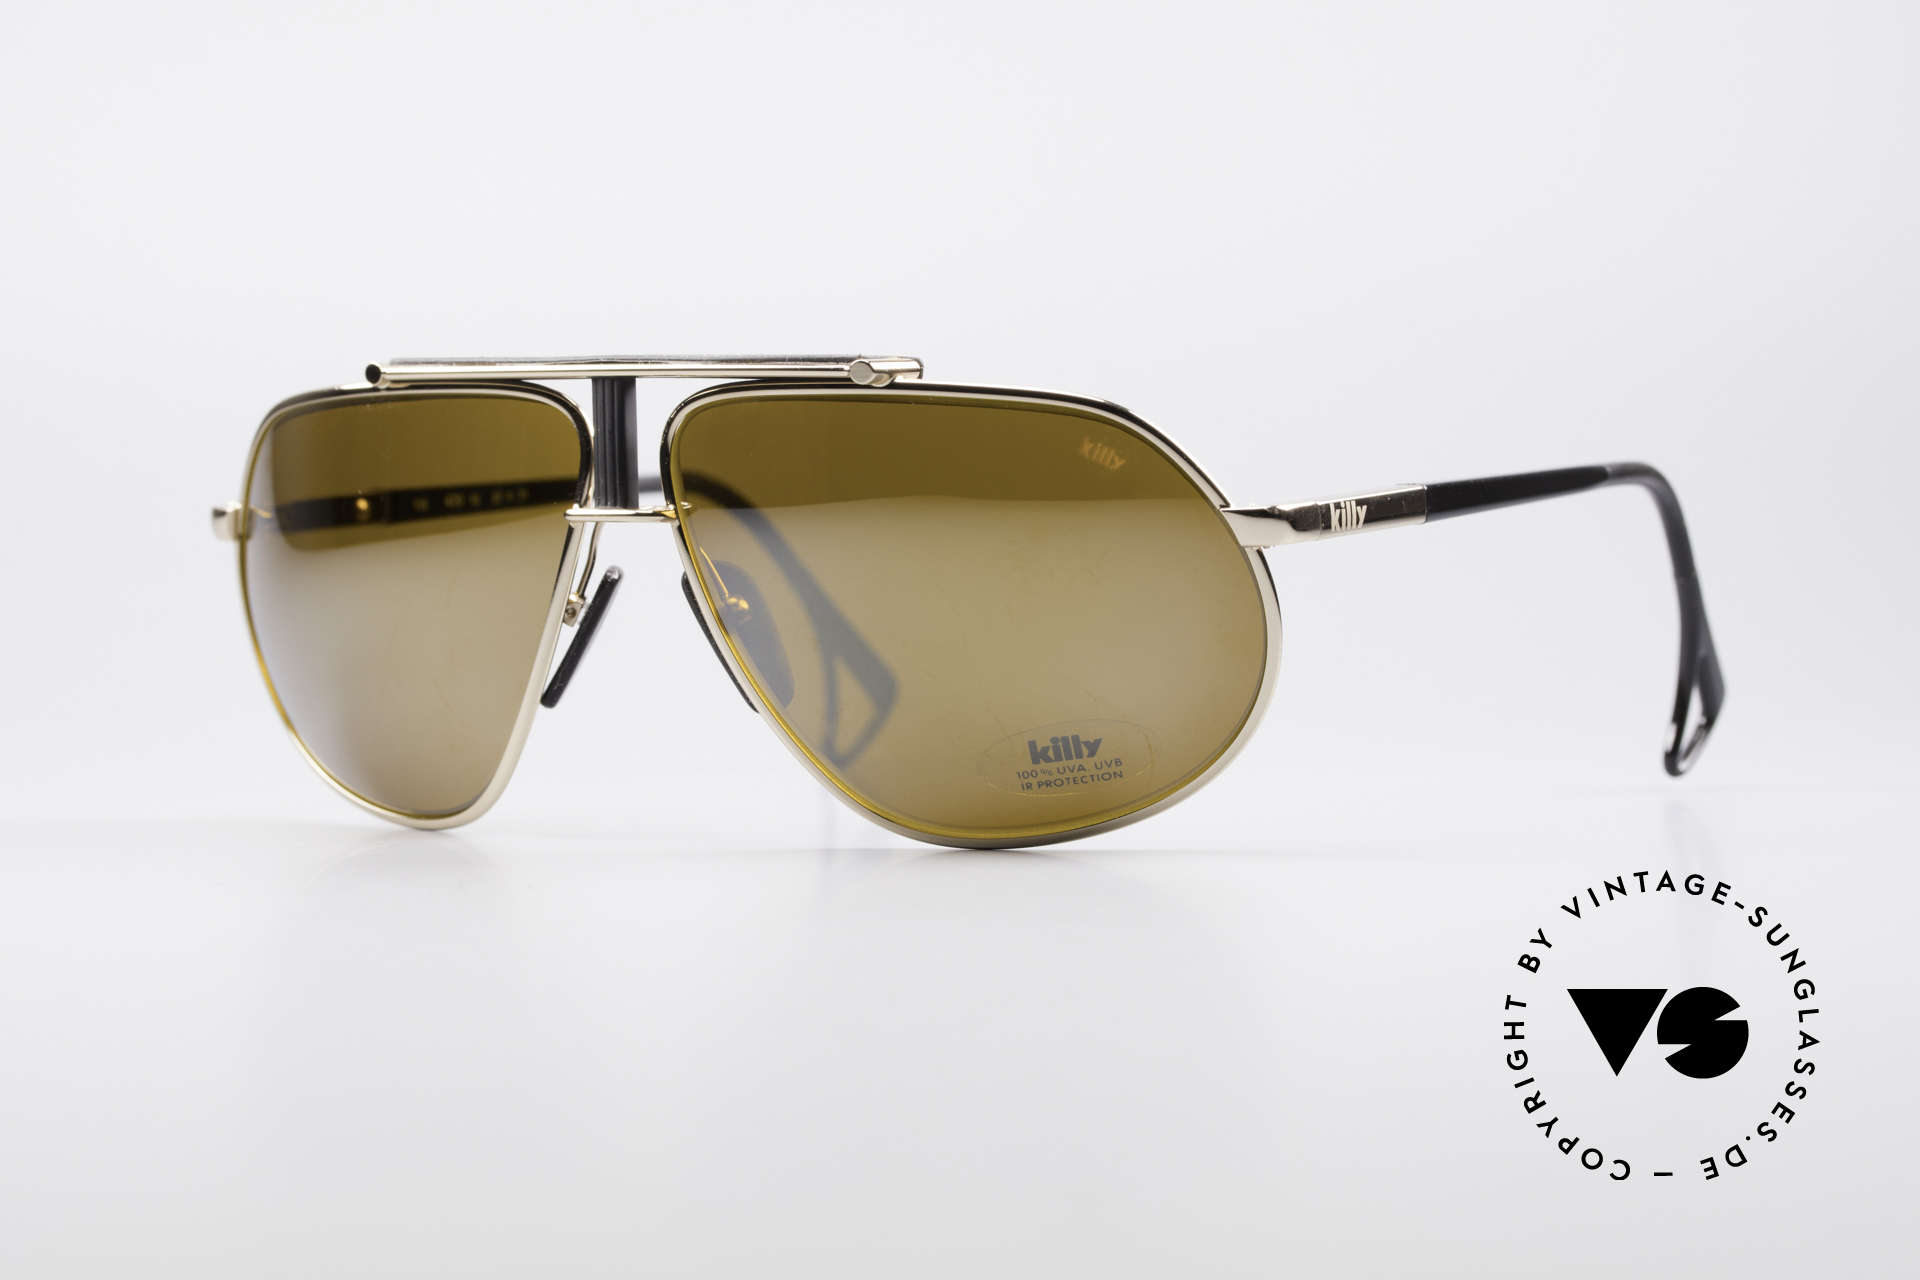 Sunglasses Killy 470 High End Sports Shades